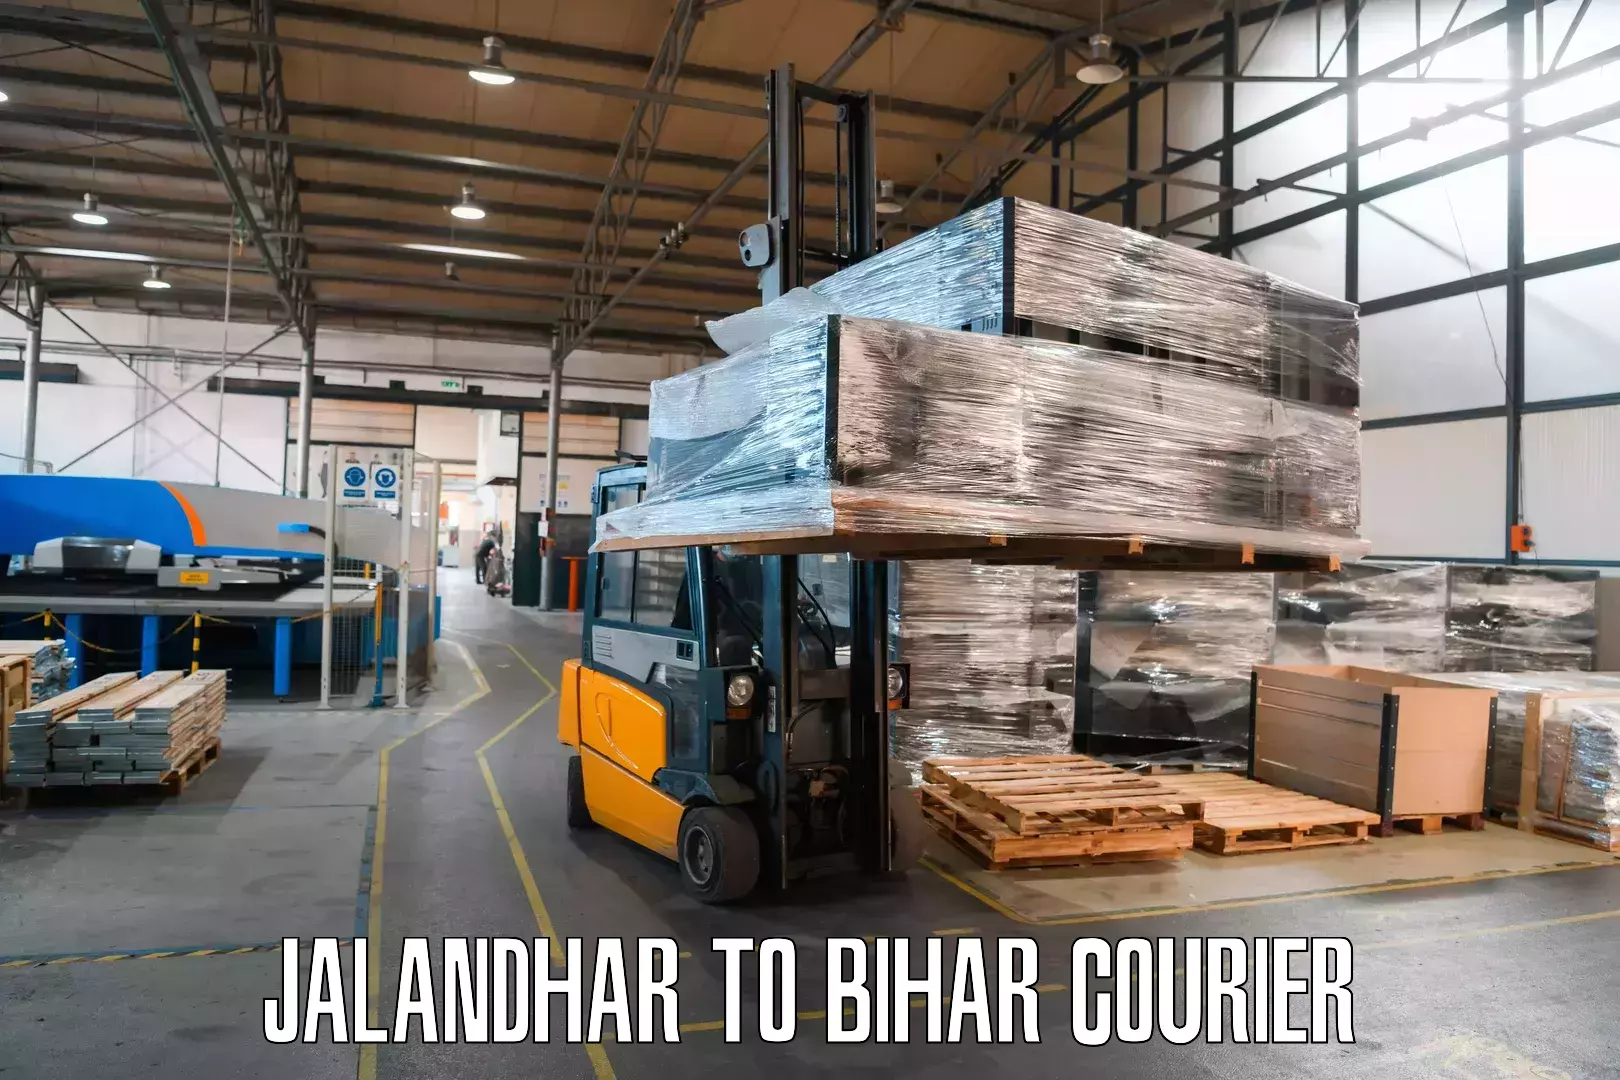 Global shipping networks Jalandhar to Jalalgarh